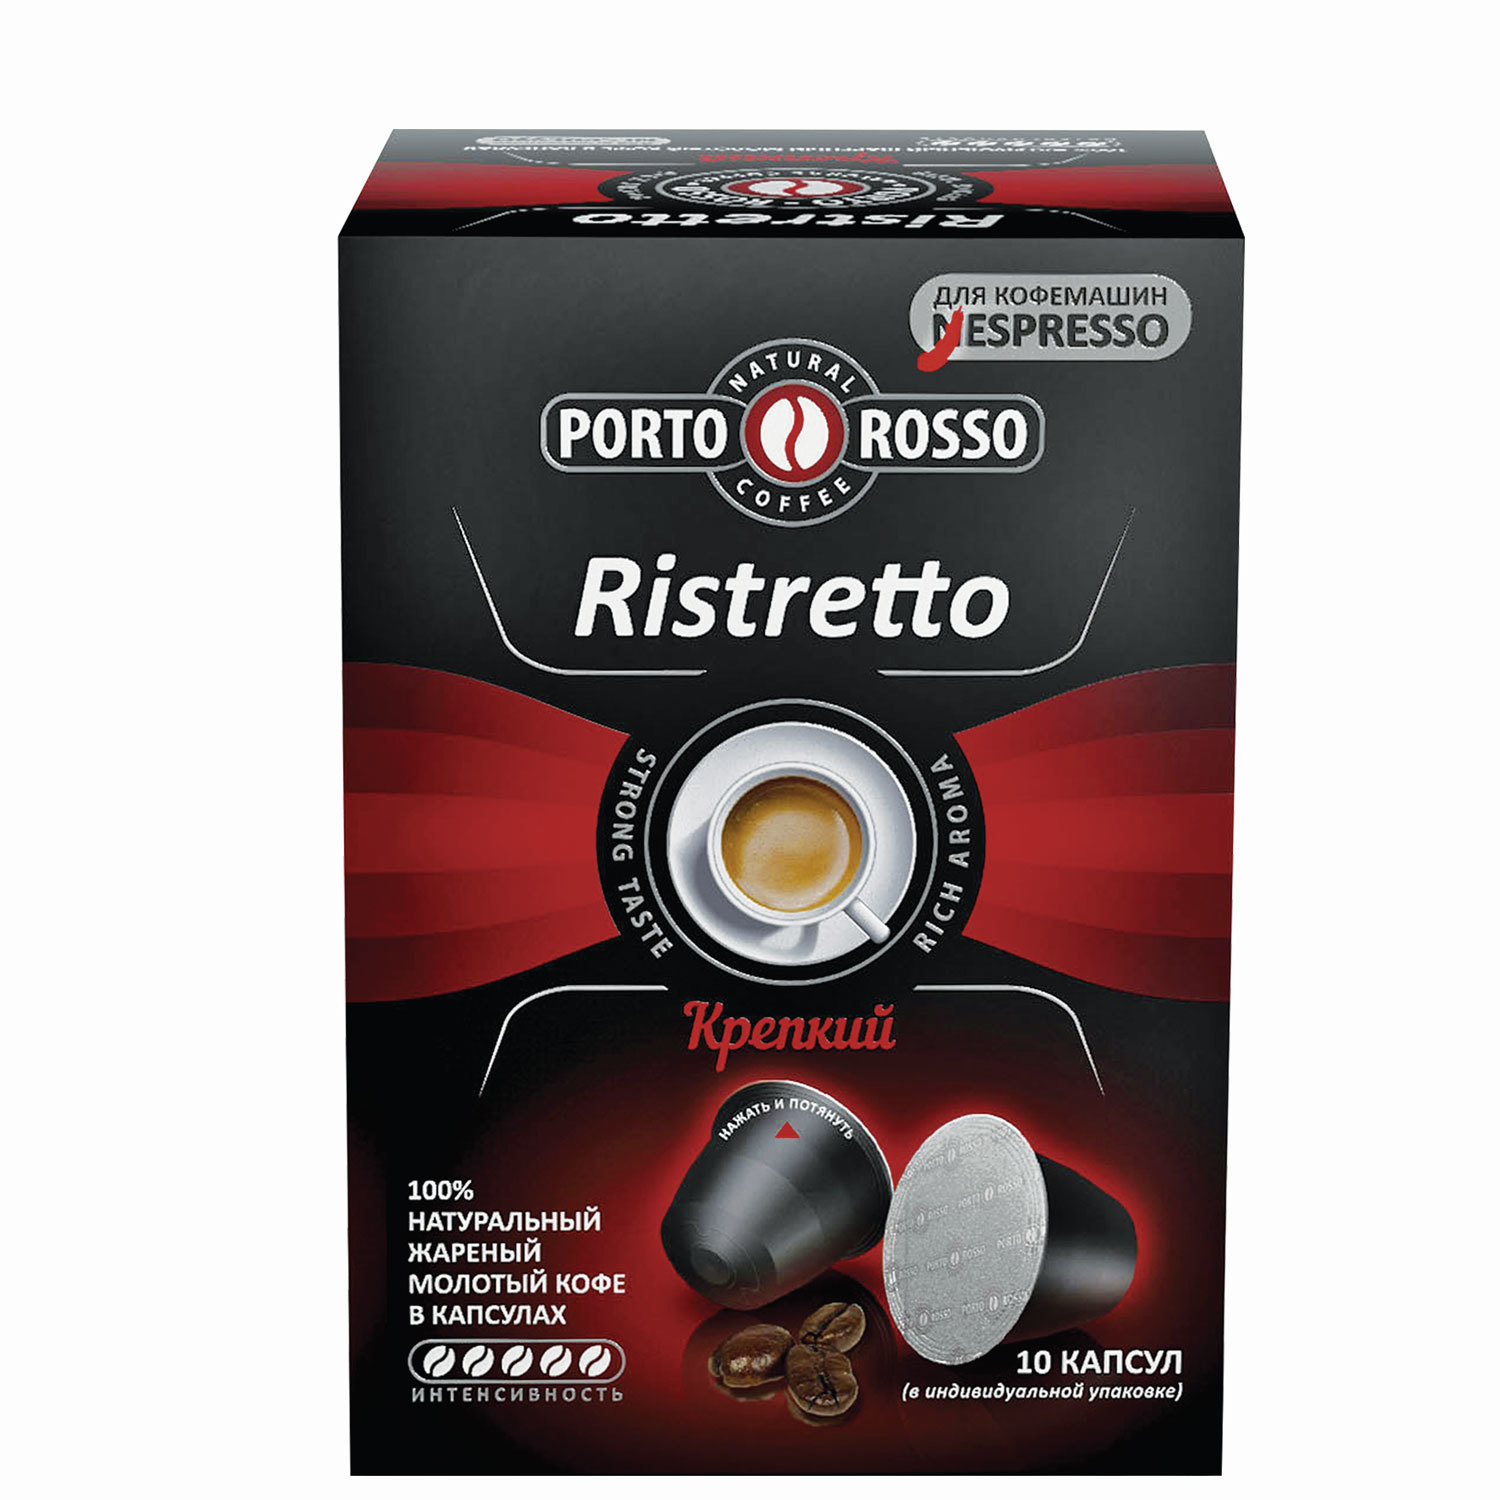 Кофе PORTO ROSSO 620903